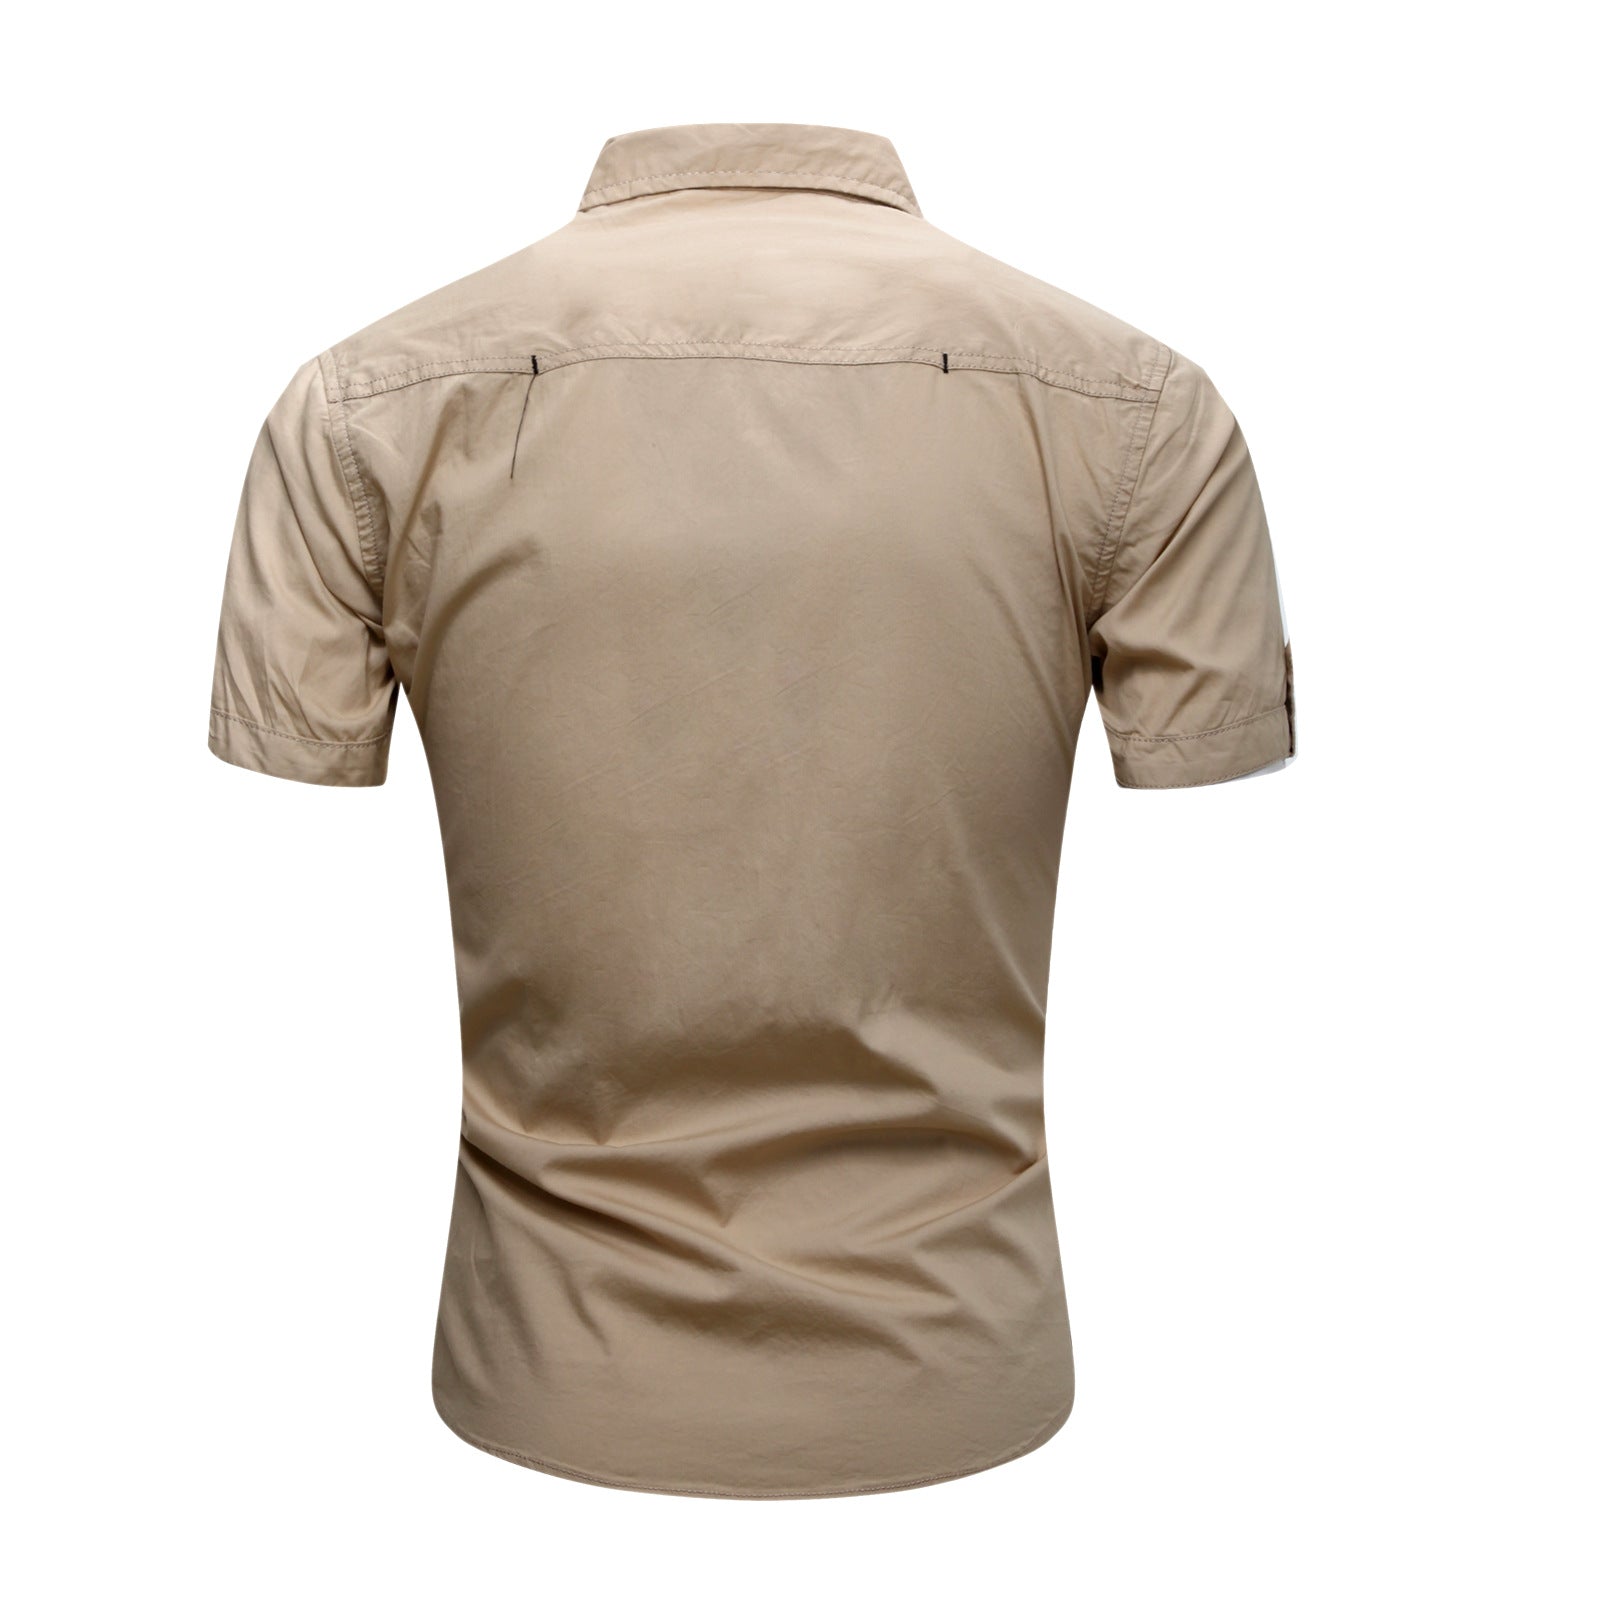 Men‘s Military Outdoor 100% Cotton Shirt